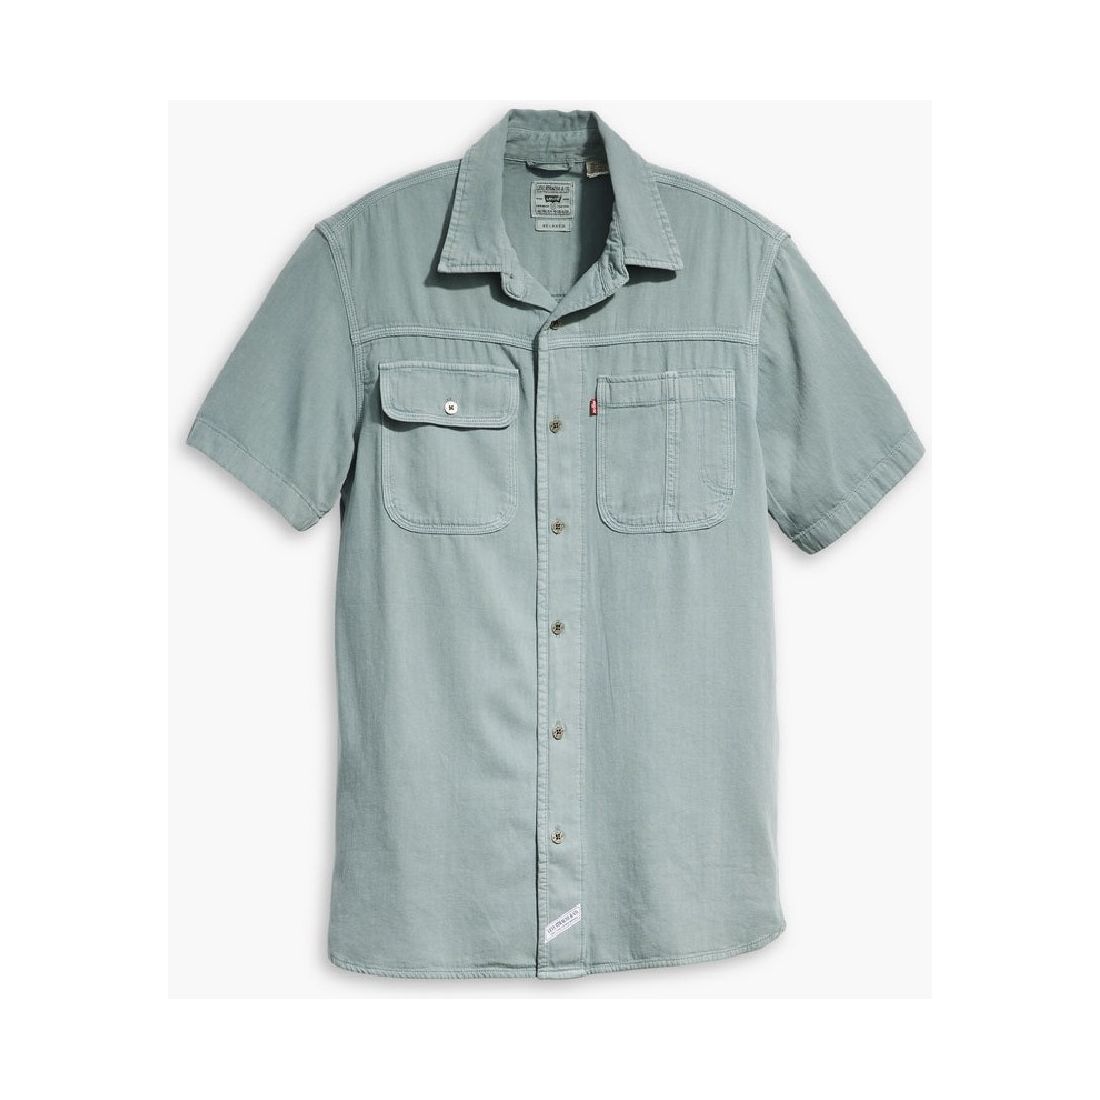 Levi's - Auburn Worker Shirt in Blue Garment